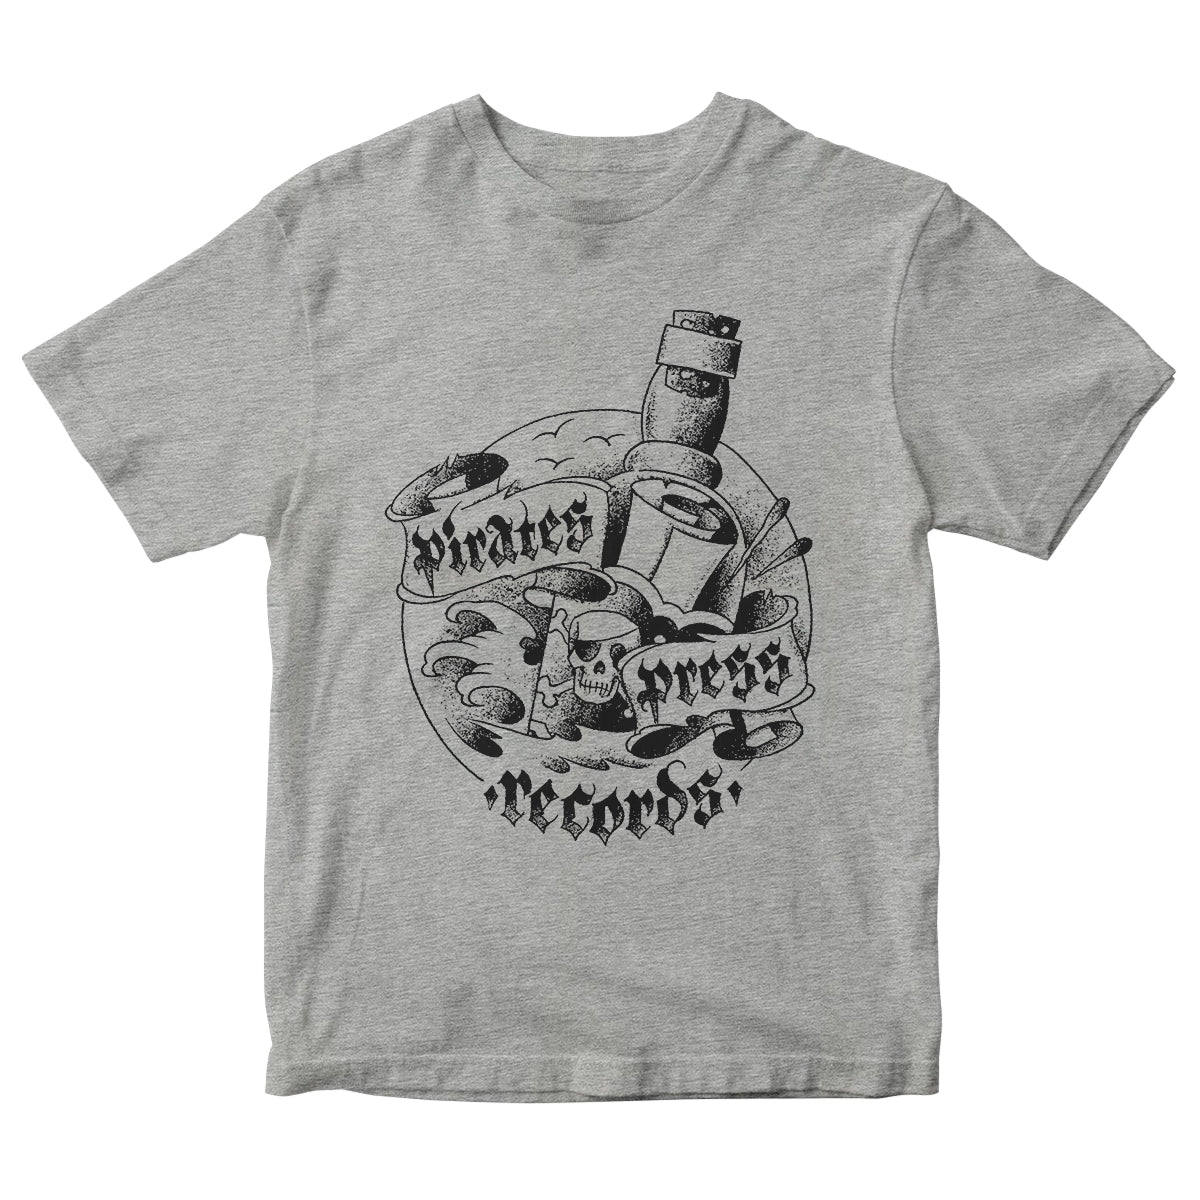 Pirates Press Records - Bottle - Black on Grey - T-Shirt